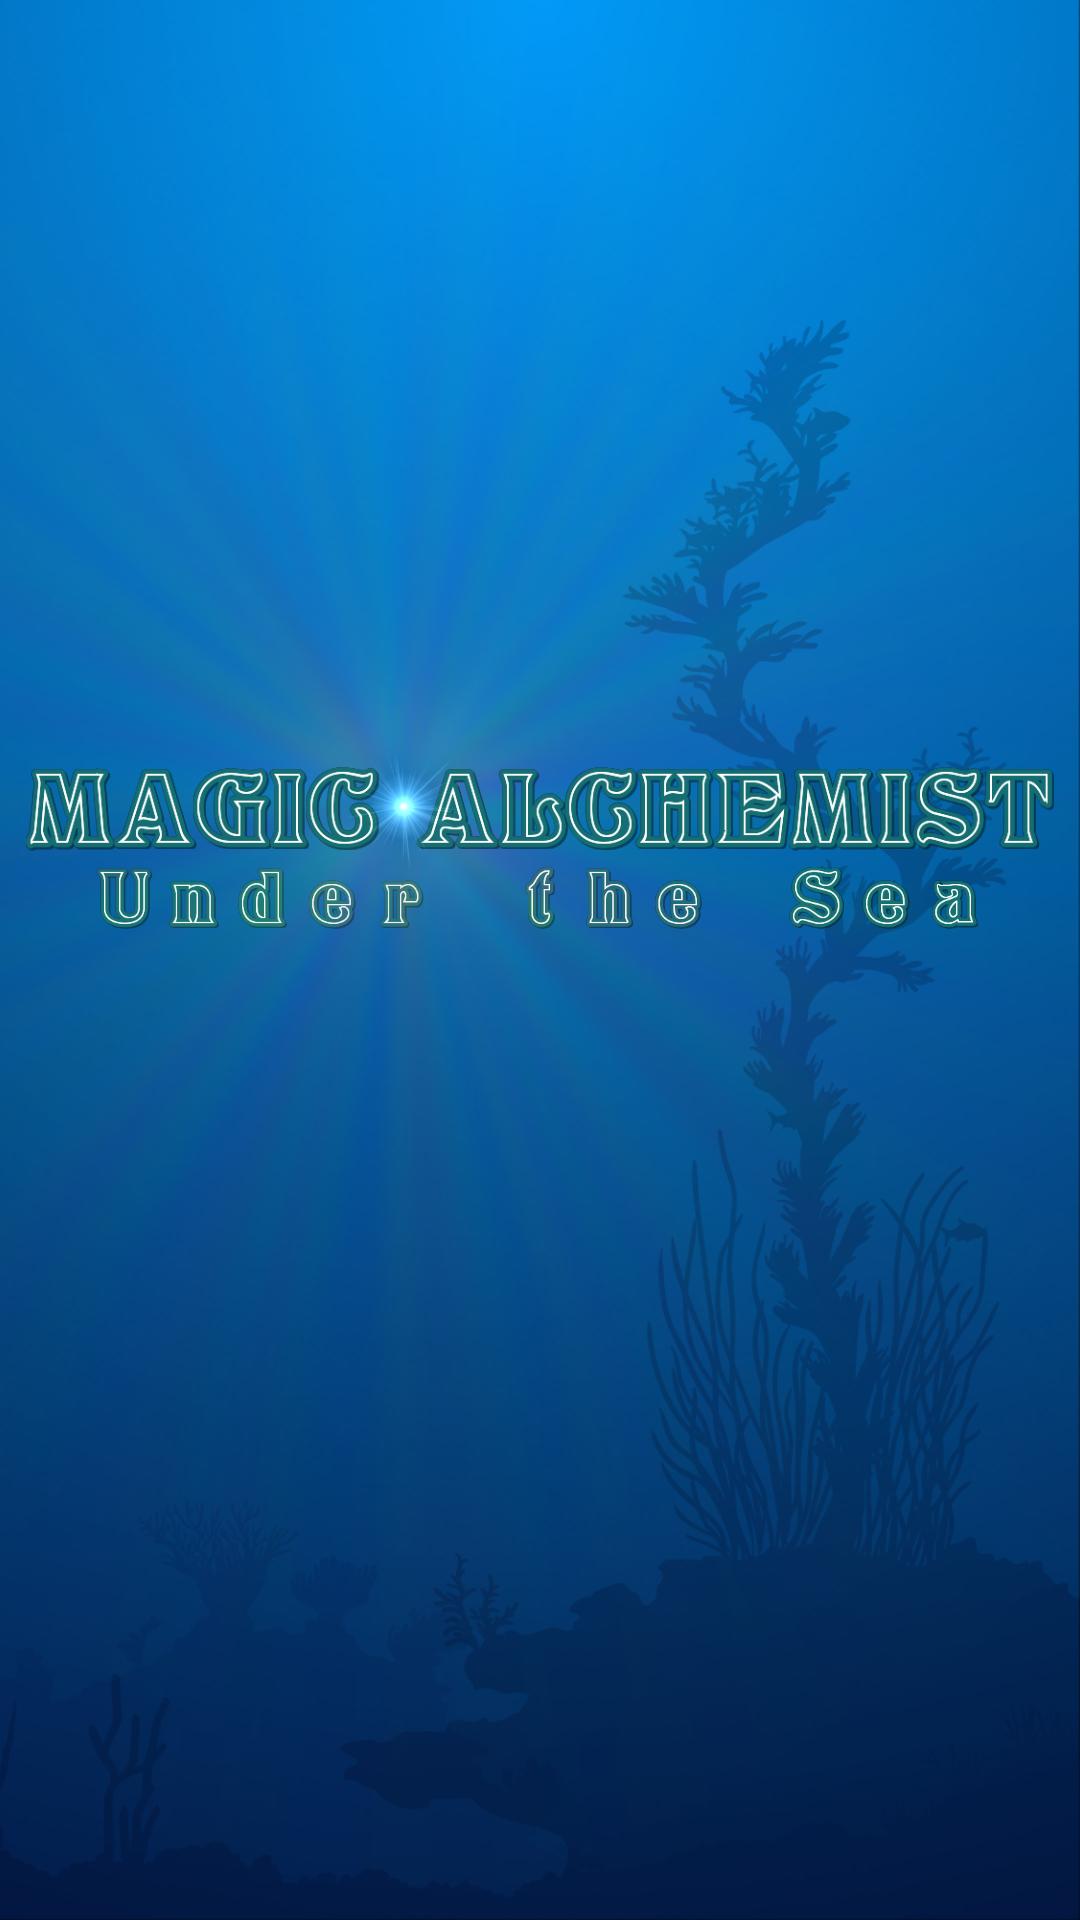 Magic Alchemist Under the Sea 2.01 Screenshot 1